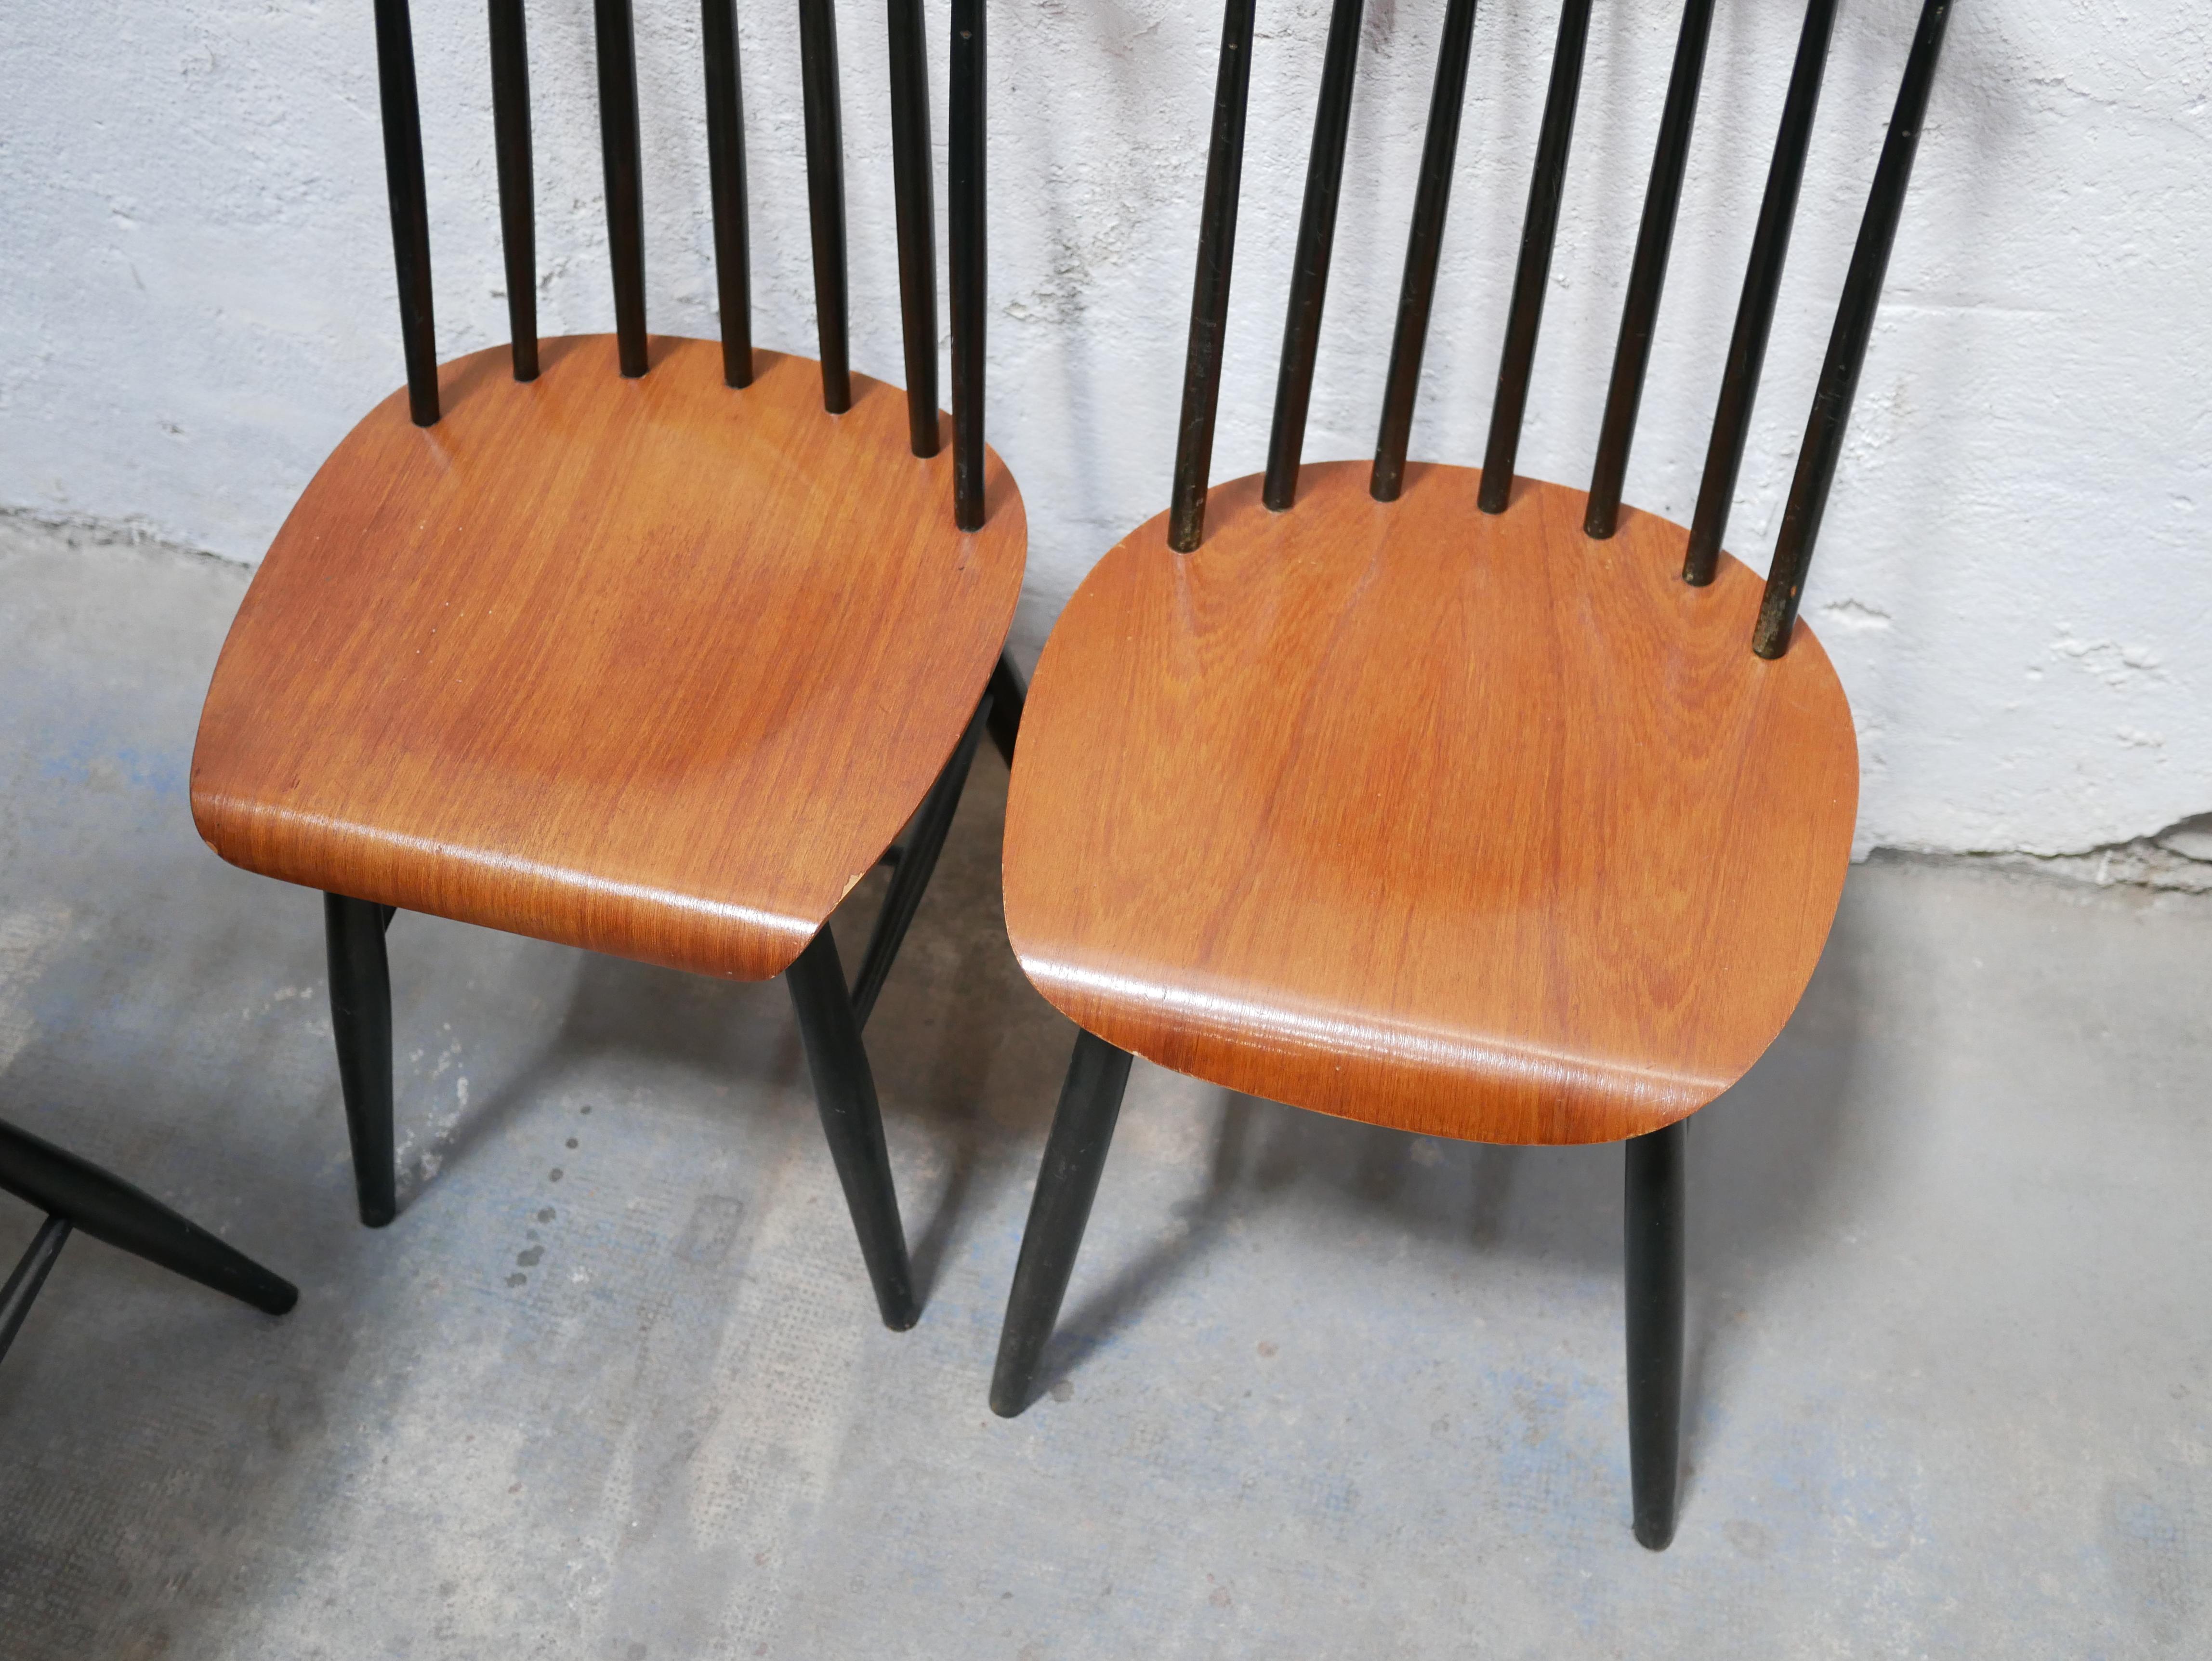 Vintage Scandinavian chair by I.Tapiovaara model Fanett 1